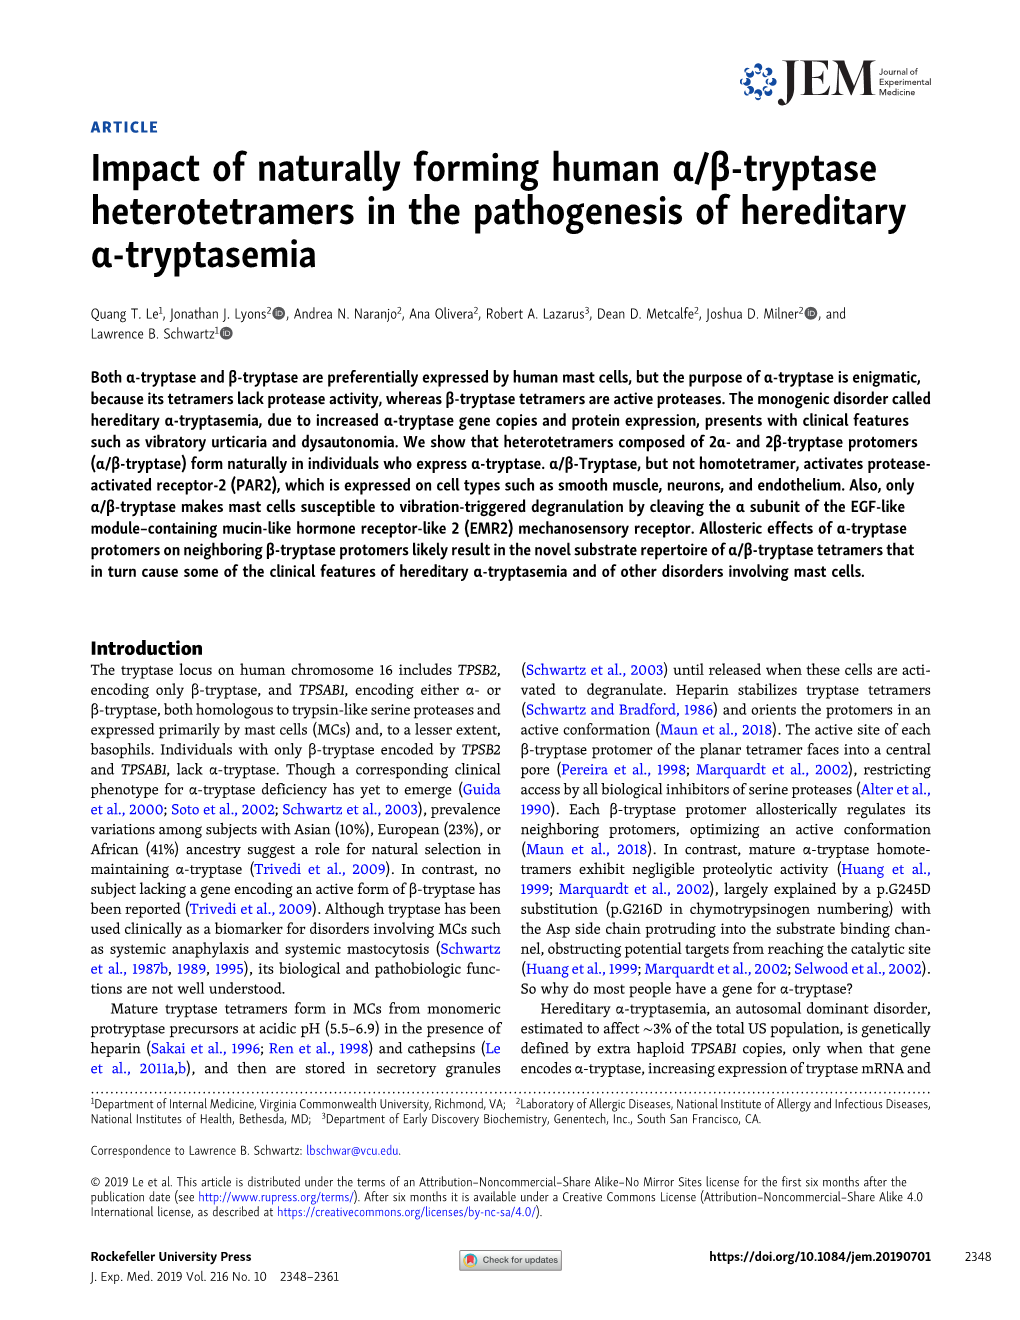 Impact of Naturally Forming Human Α/Β-Tryptase Heterotetramers in the Pathogenesis of Hereditary Α-Tryptasemia